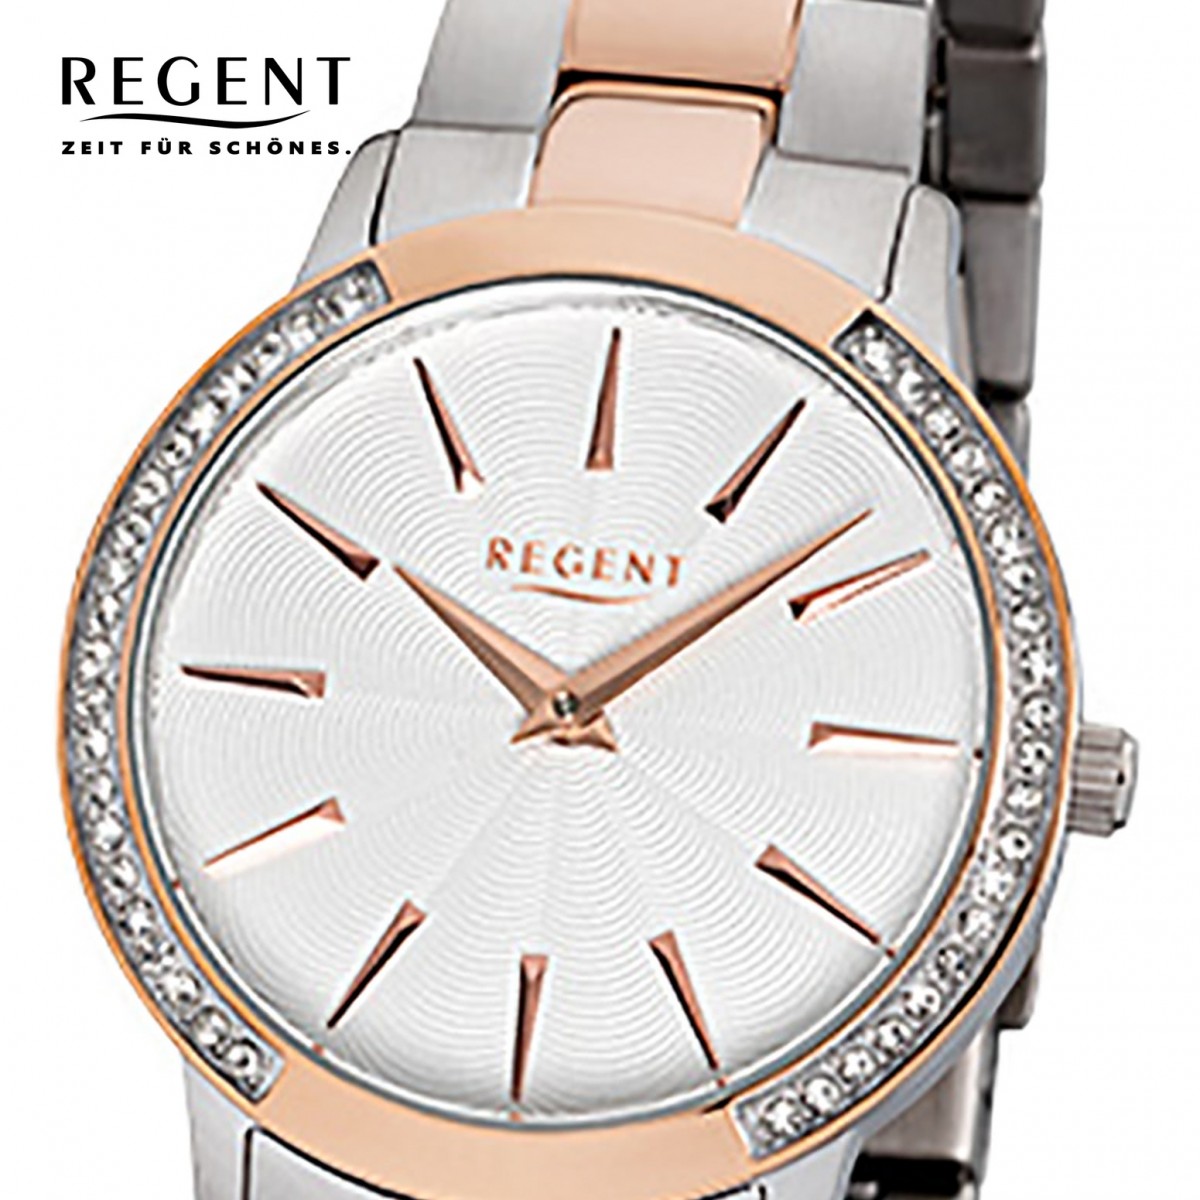 Regent Damen-Armbanduhr 32-F-1056 Quarz-Uhr Edelstahl-Armband silber UR rosegold URF1056